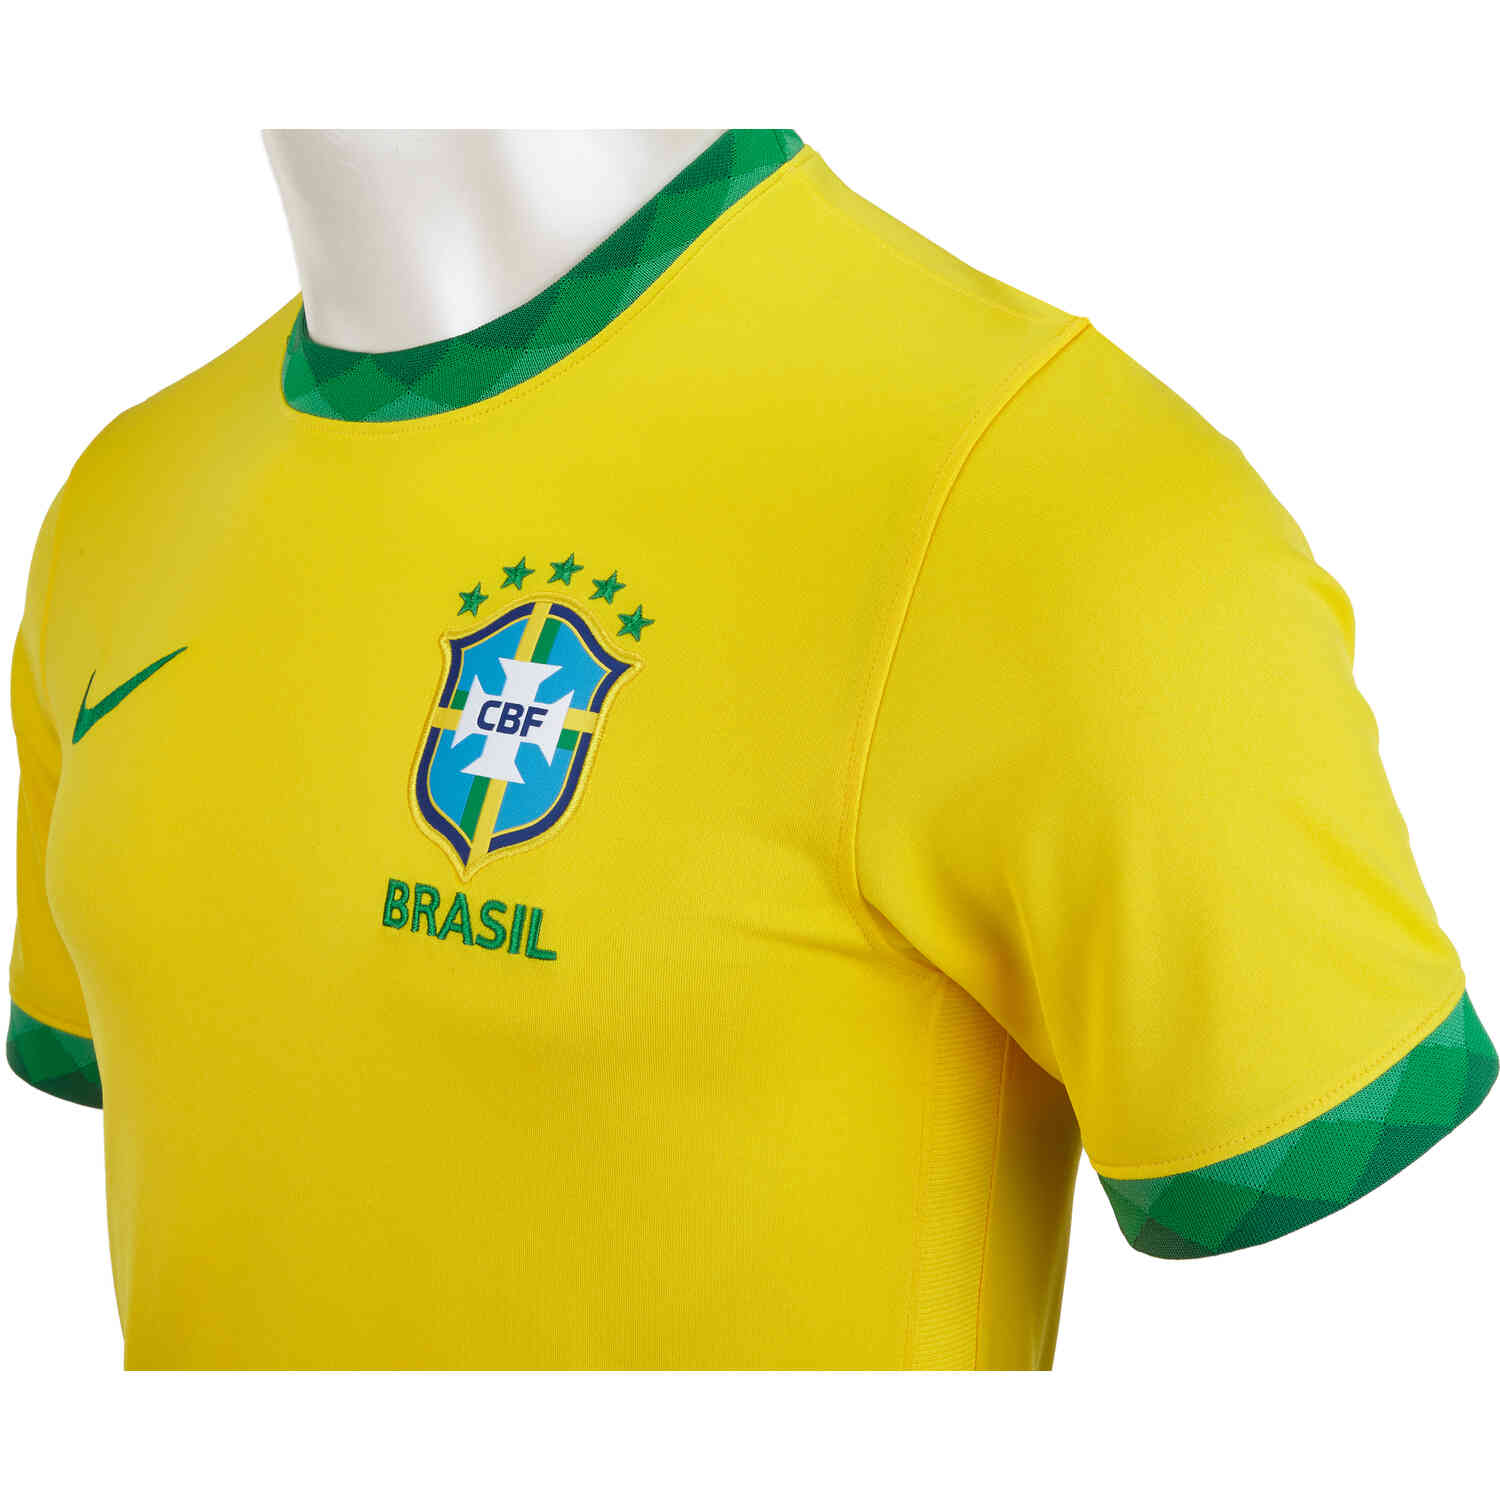 BRAZIL HOME 2020  Camisa nike, Nike outlet, Camisa